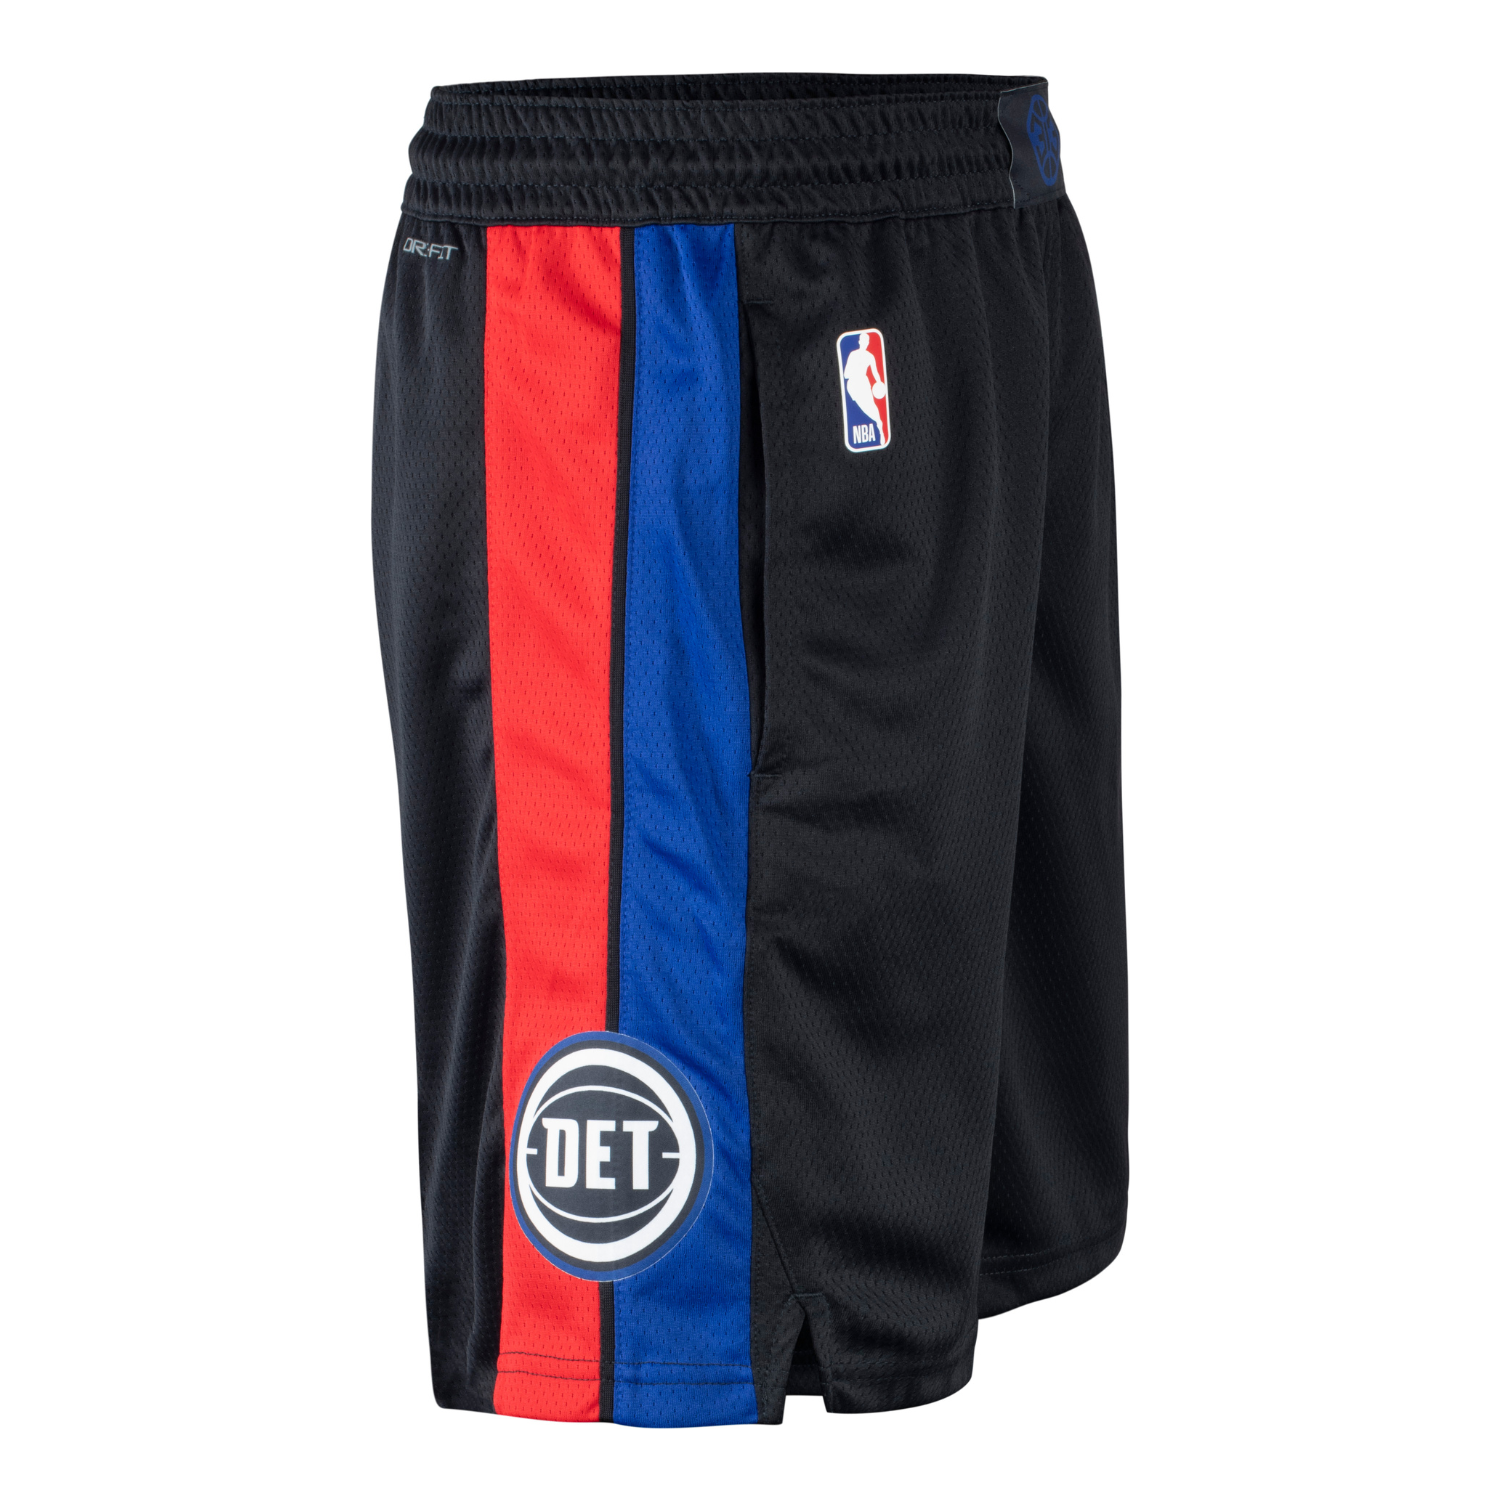 La Clippers Jordan Brand Swingman Custom Jersey - Statement Edition Black